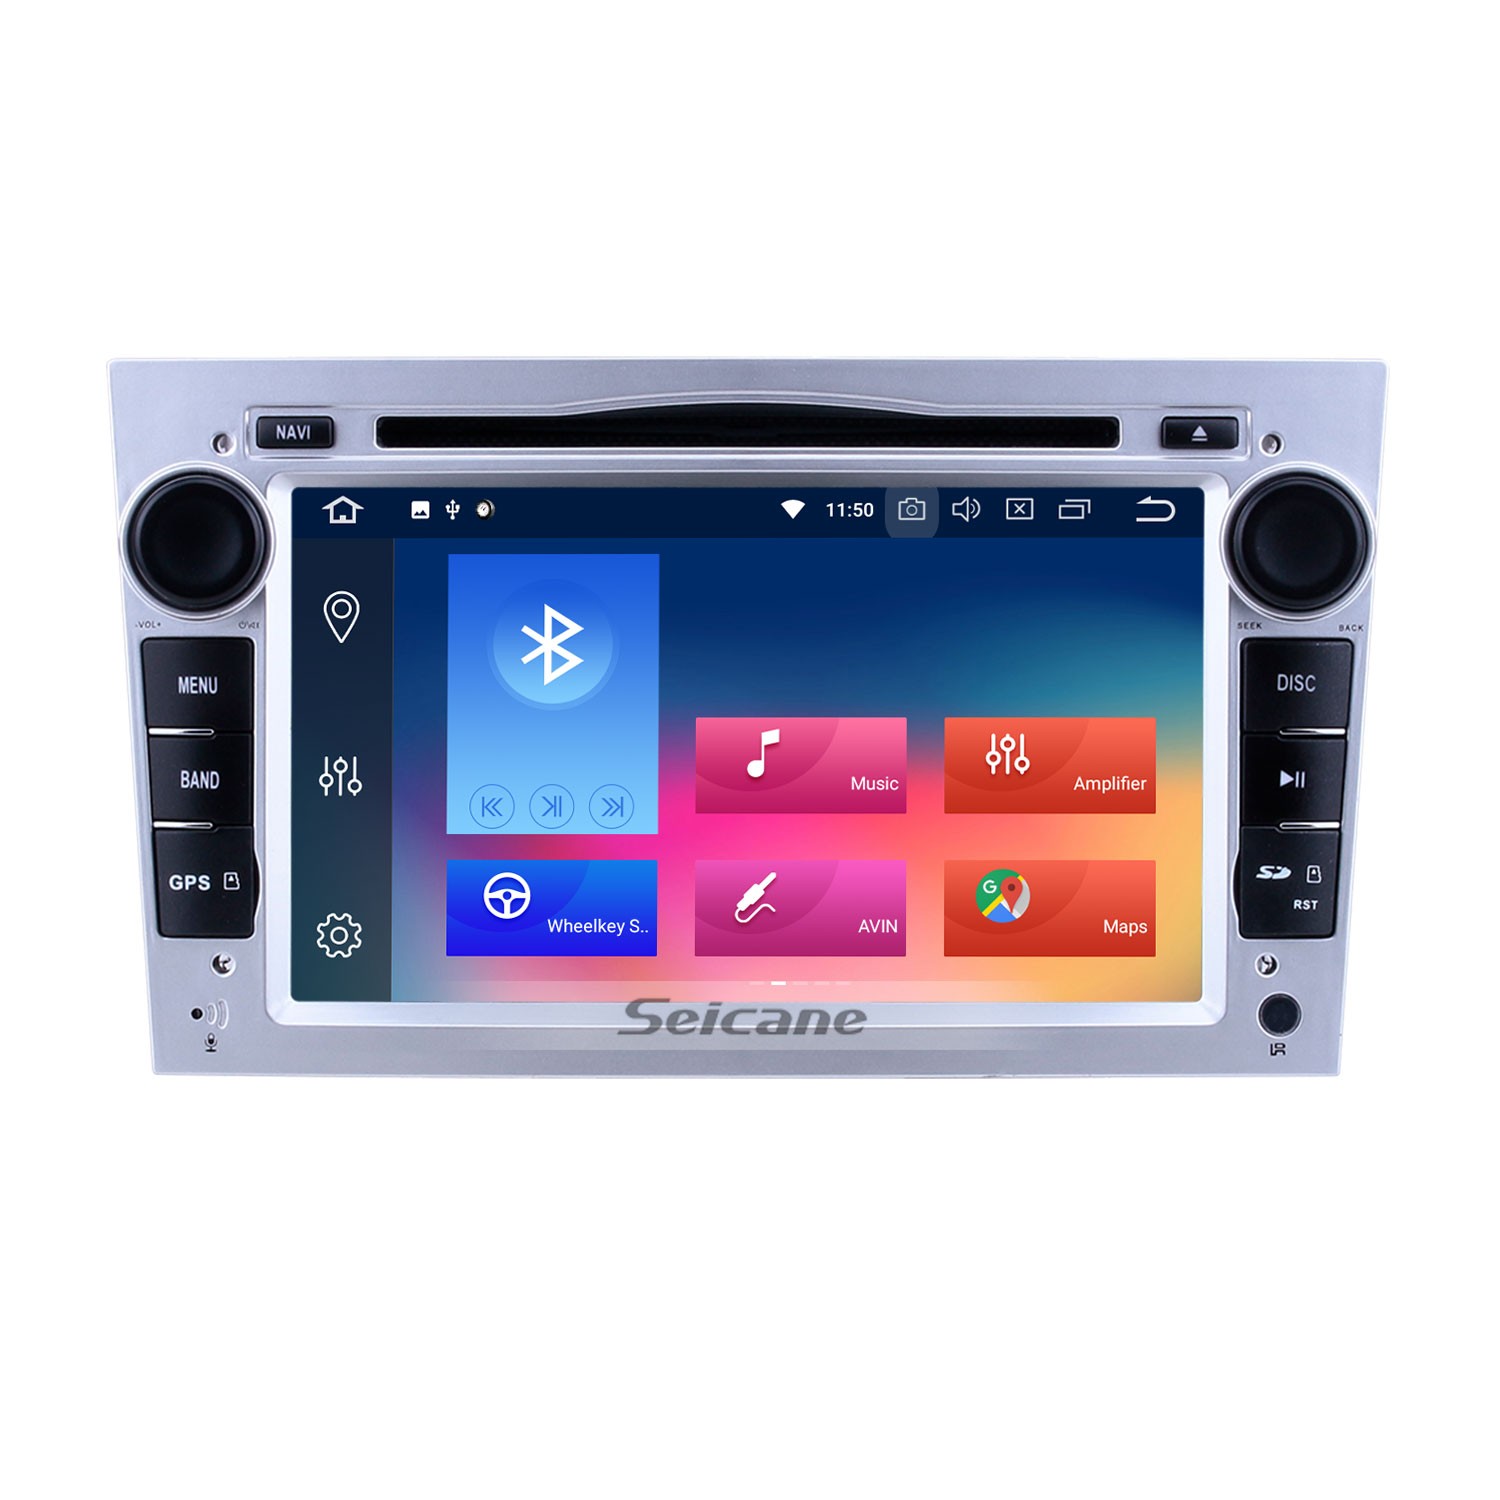 Autoradio multimédia Android, Navigation GPS, écran HD, lecteur CD